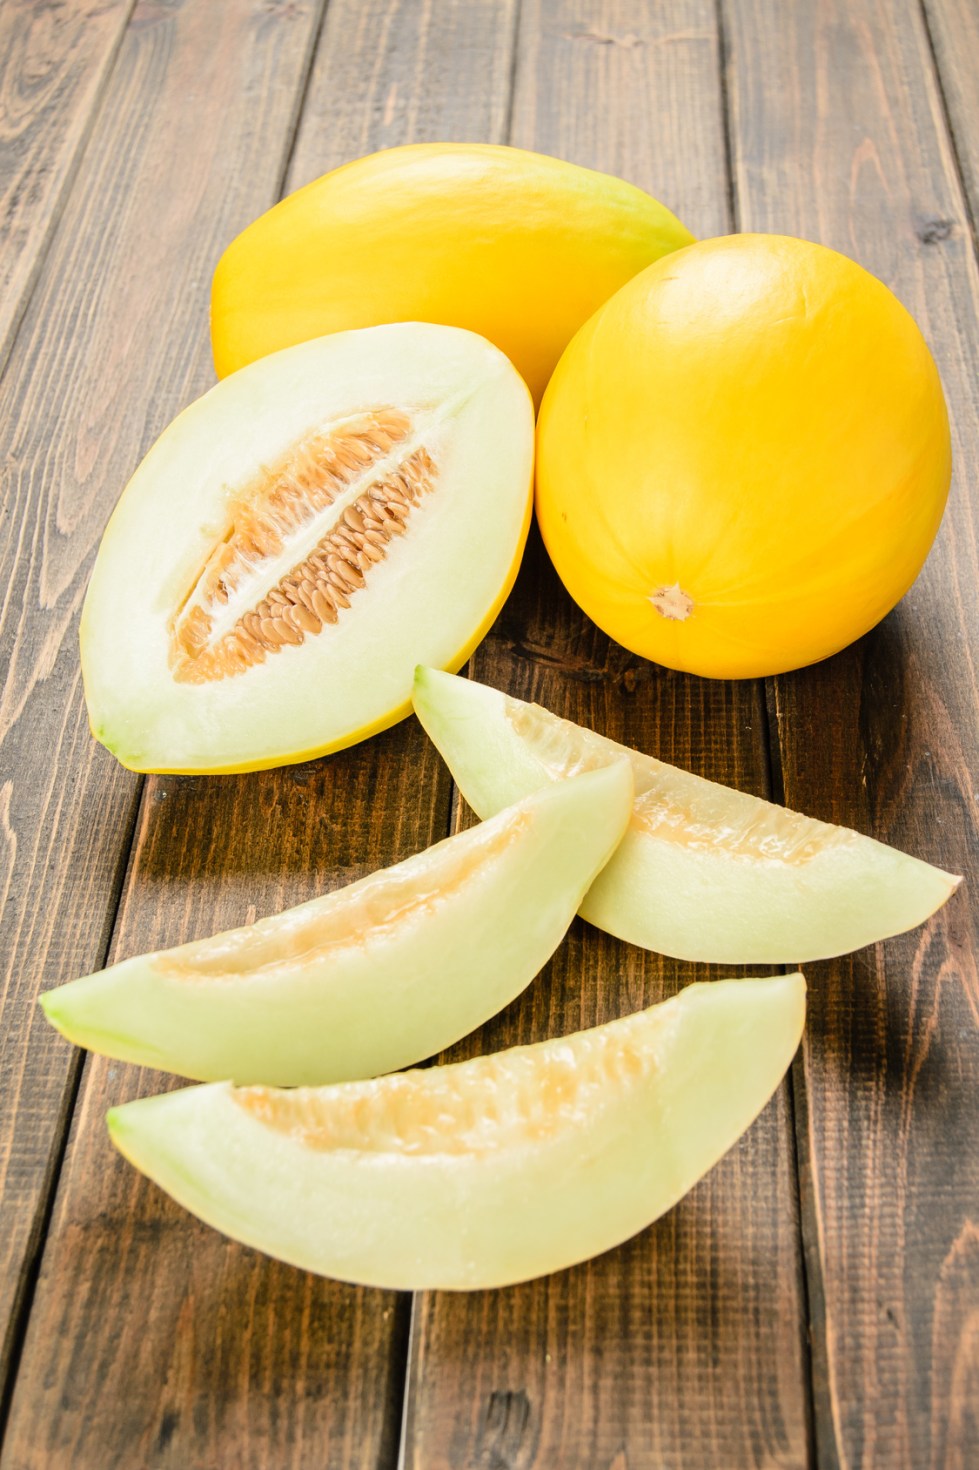 yellow melon slices